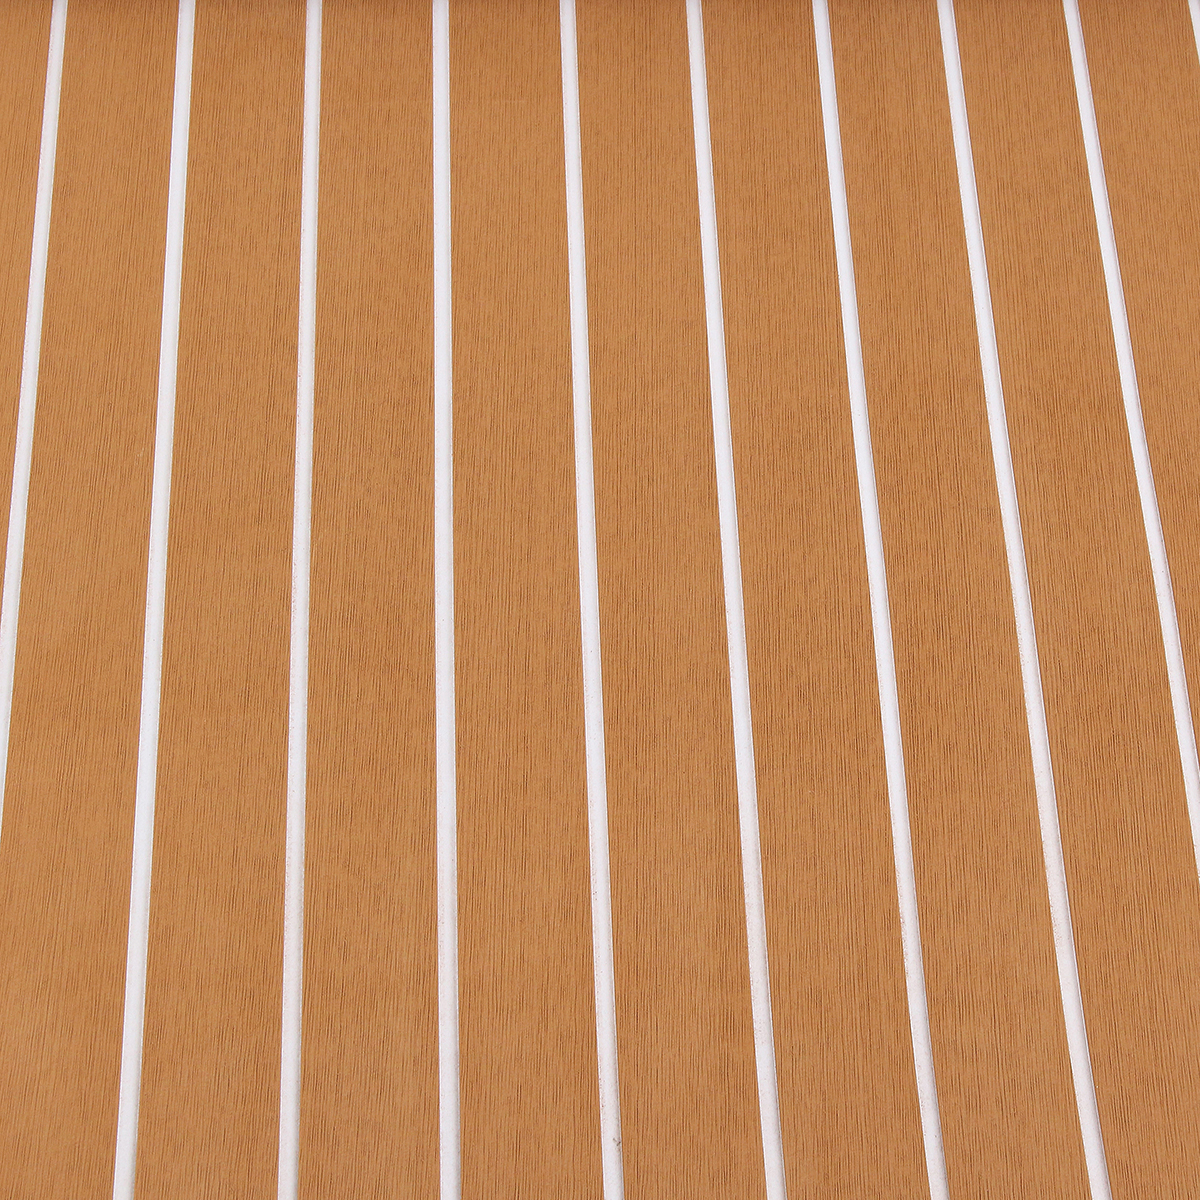 Brown-and-White-Striped-EVA-Imitation-Foam-Teak-Luxury-for-Boat-Deck-Rrailer-Cork-Plastic-Wood-Floor-1133190-2